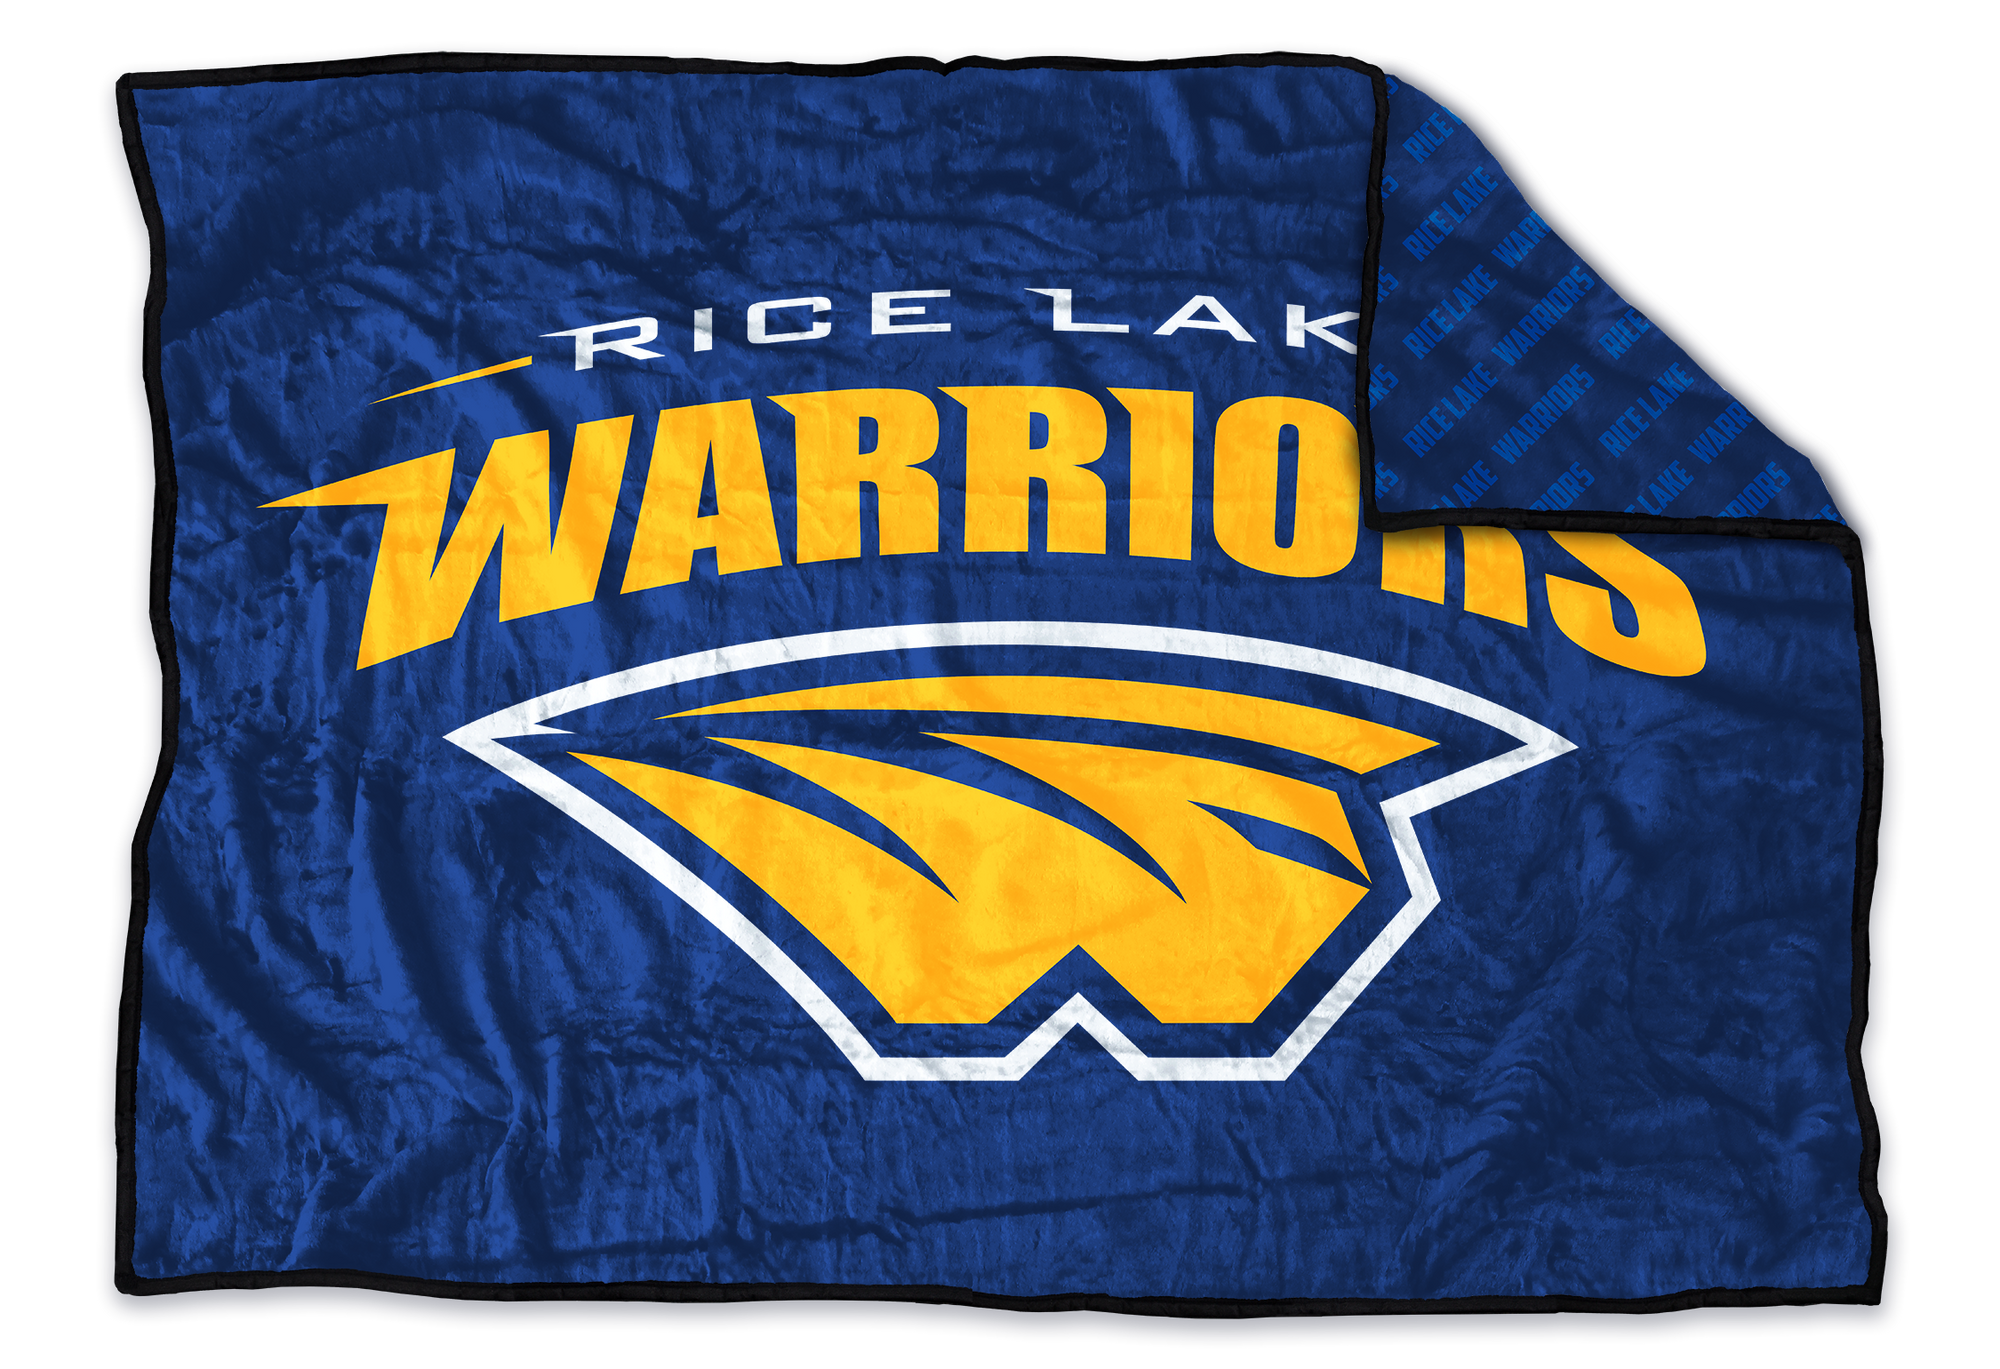 Rice Lake Warriors